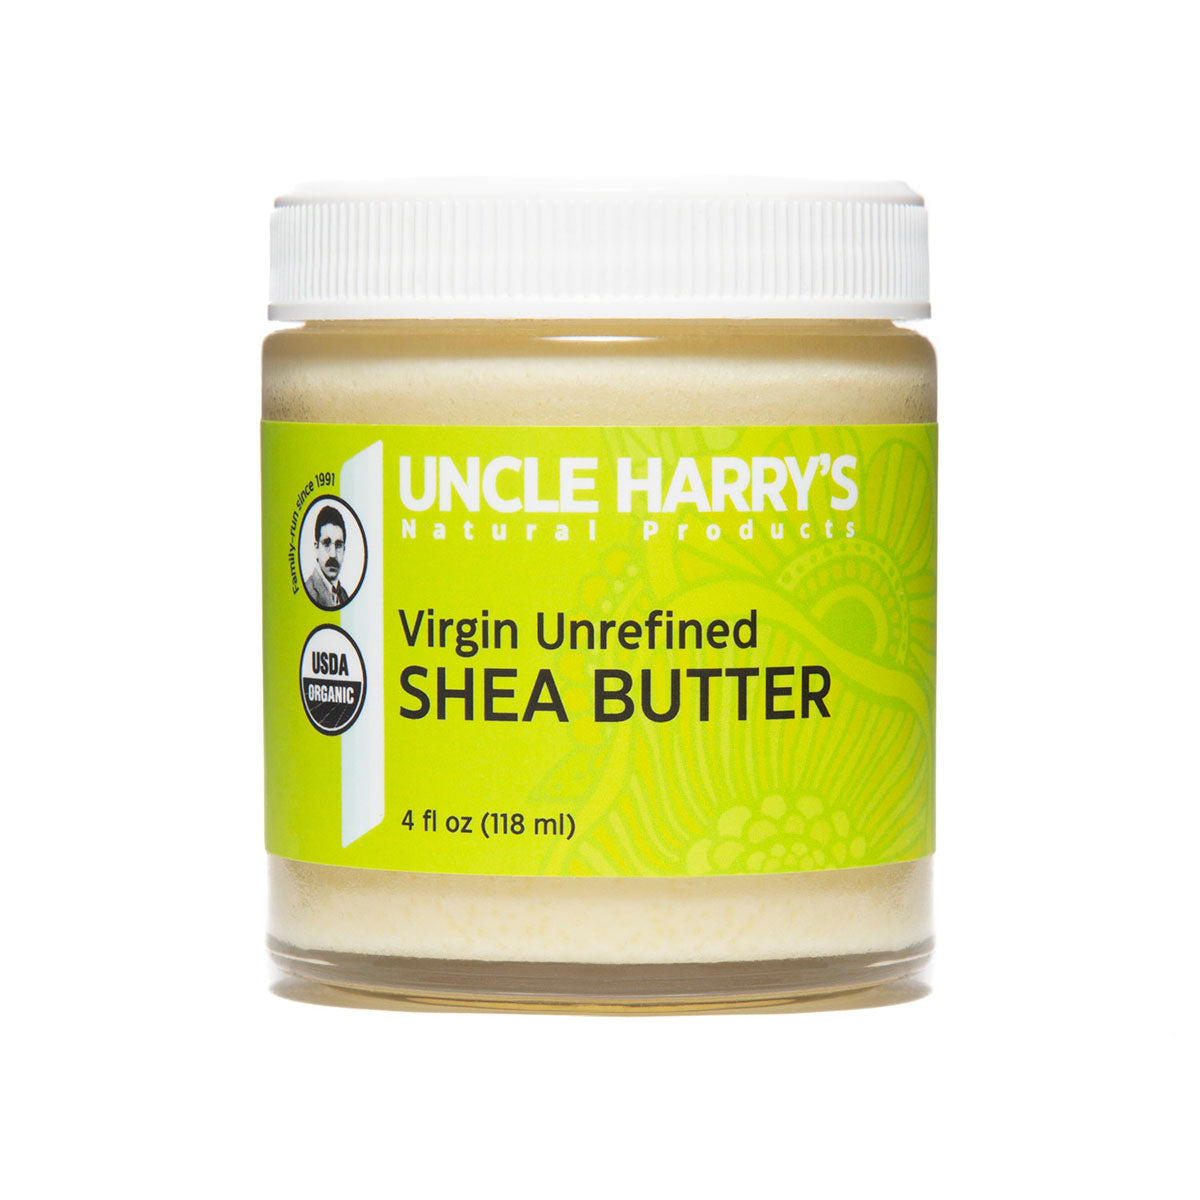 Organic Virgin Unrefined Shea Butter 4 fl oz glass jar